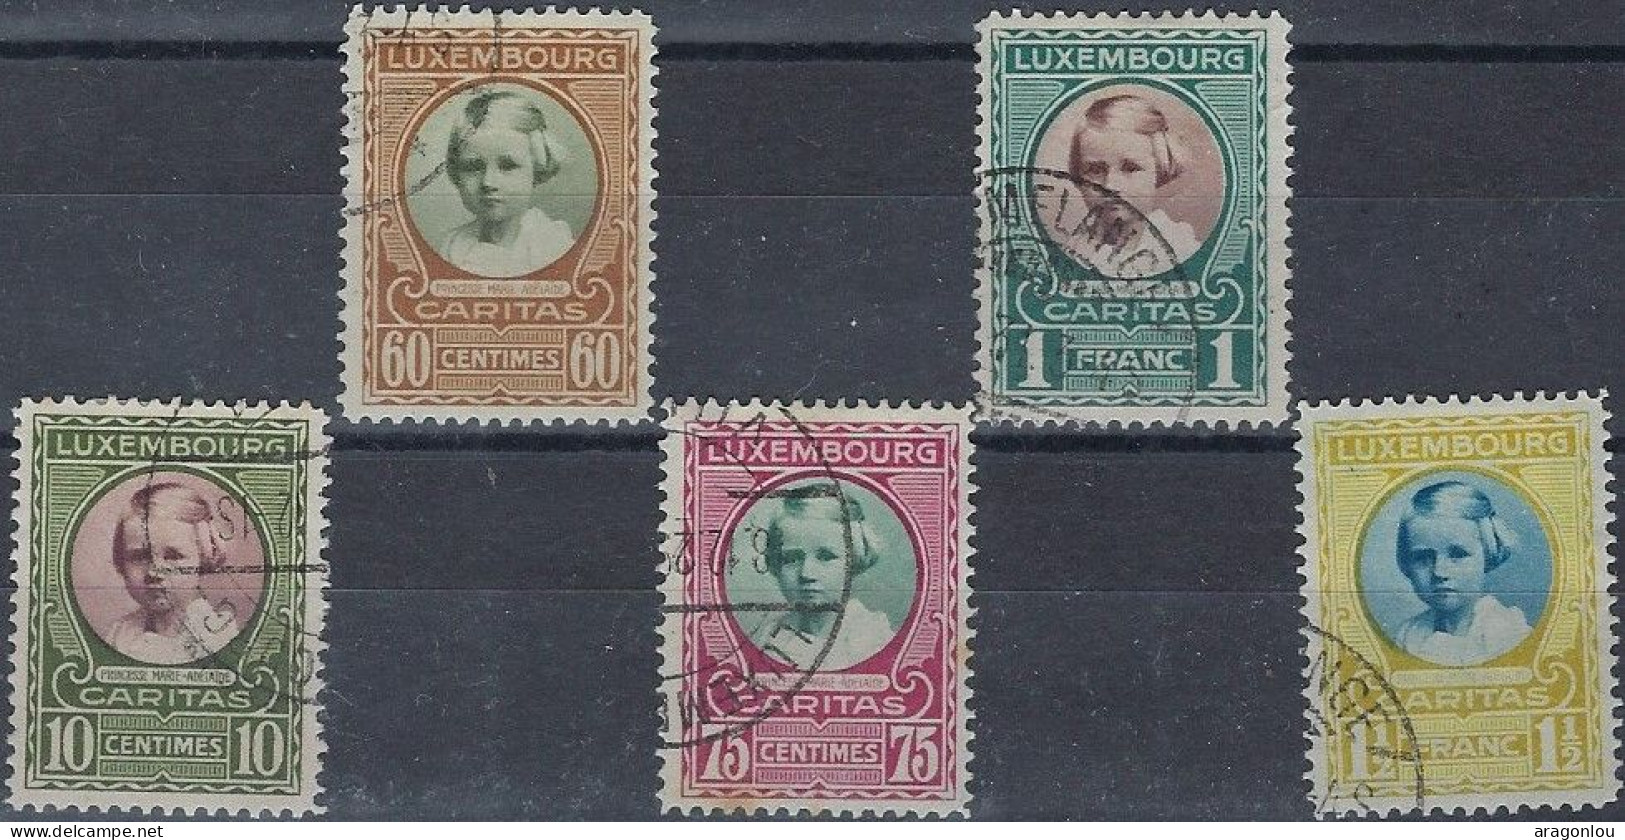 Luxembourg - Luxemburg -  Timbre  Série   1928   °   Marie - Adélaïde    VC. 60,- - Usati